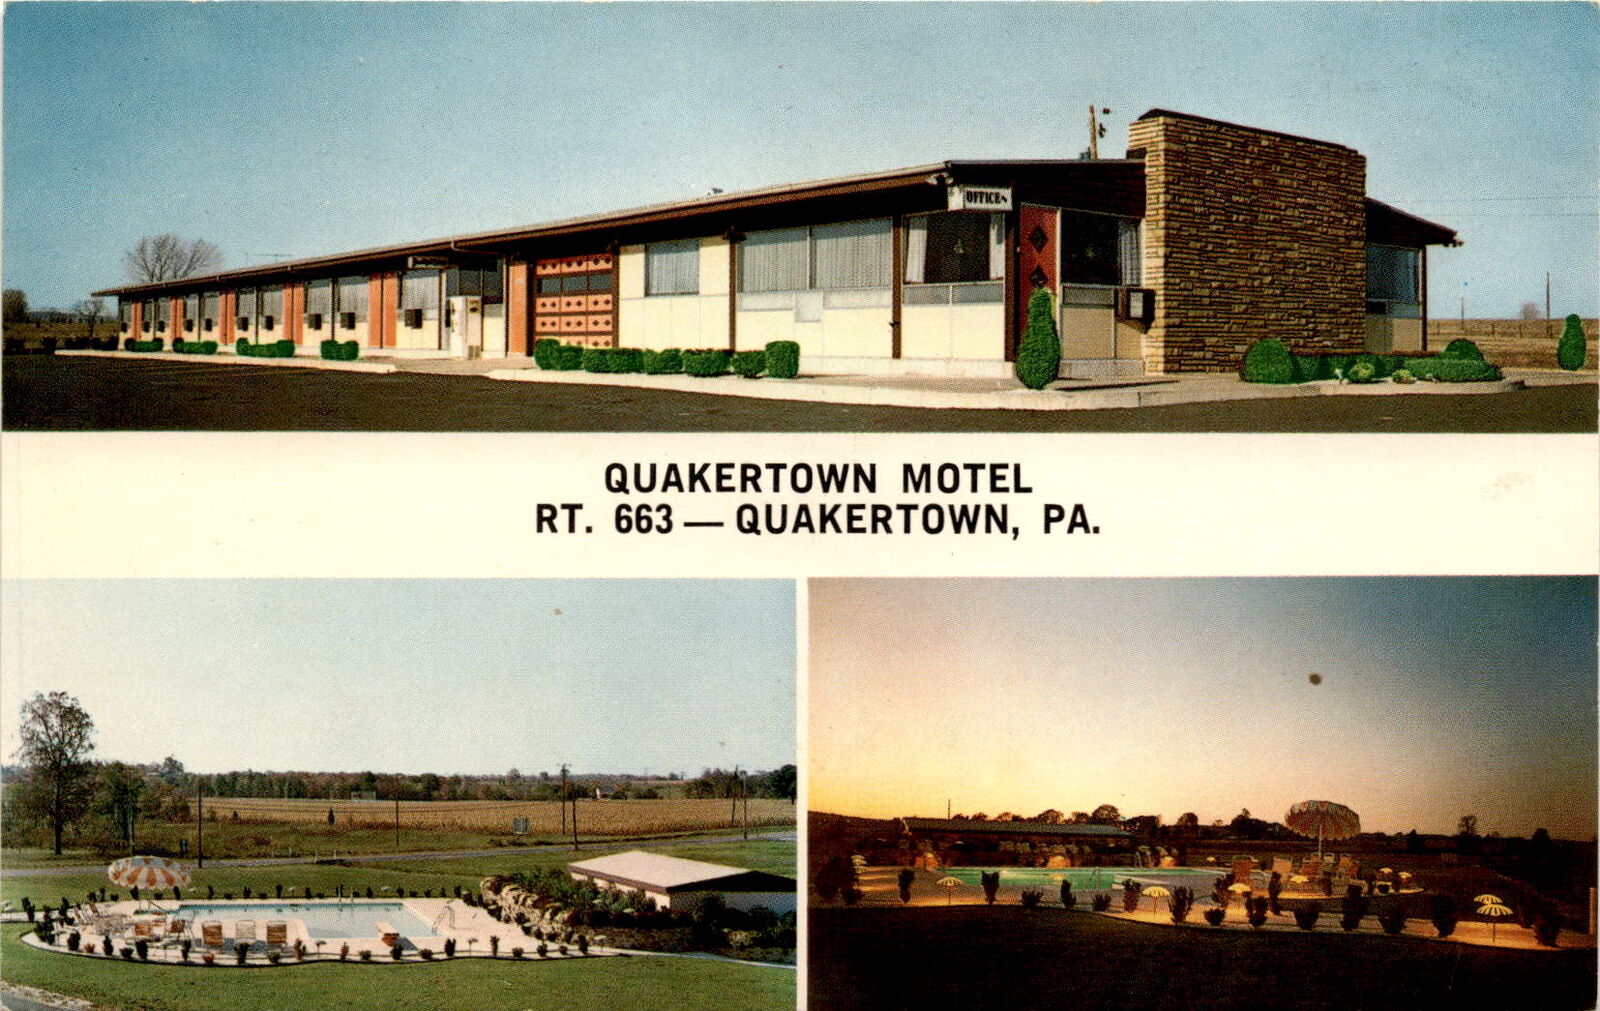 Quakertown, PA, Quakertown Motel, Rt. 663, Penna. Turnpike, continental postcard